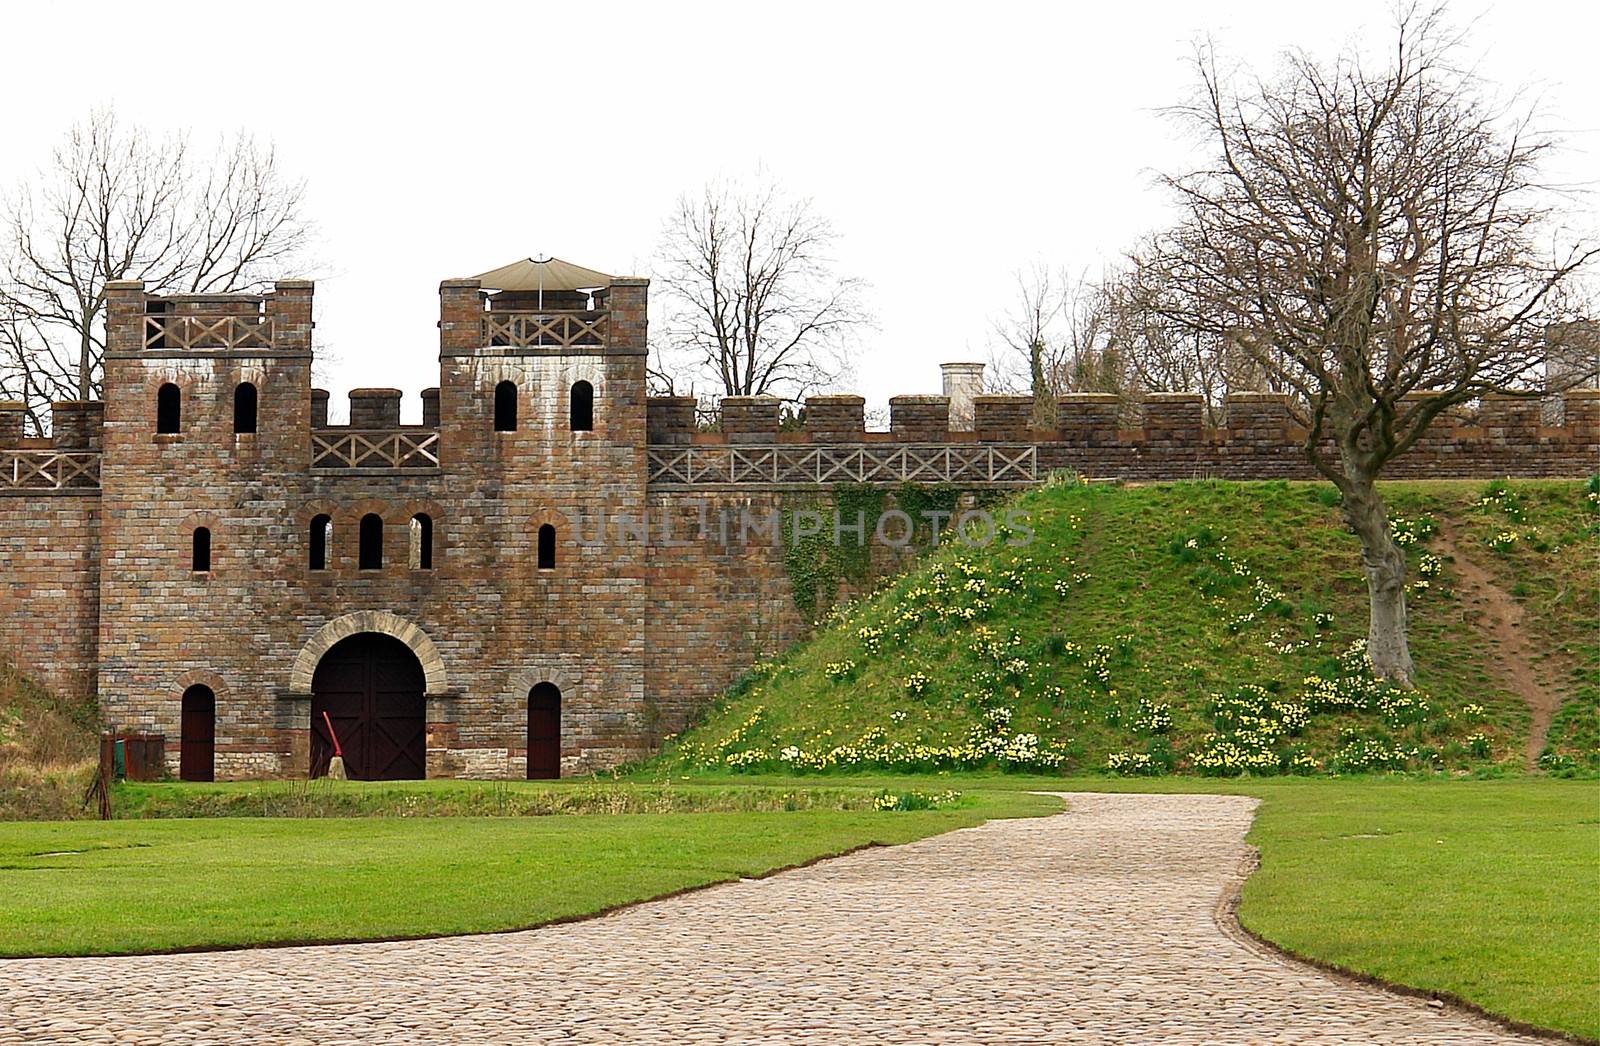 Cardiff castle & inside gardens. Wales. by ptxgarfield